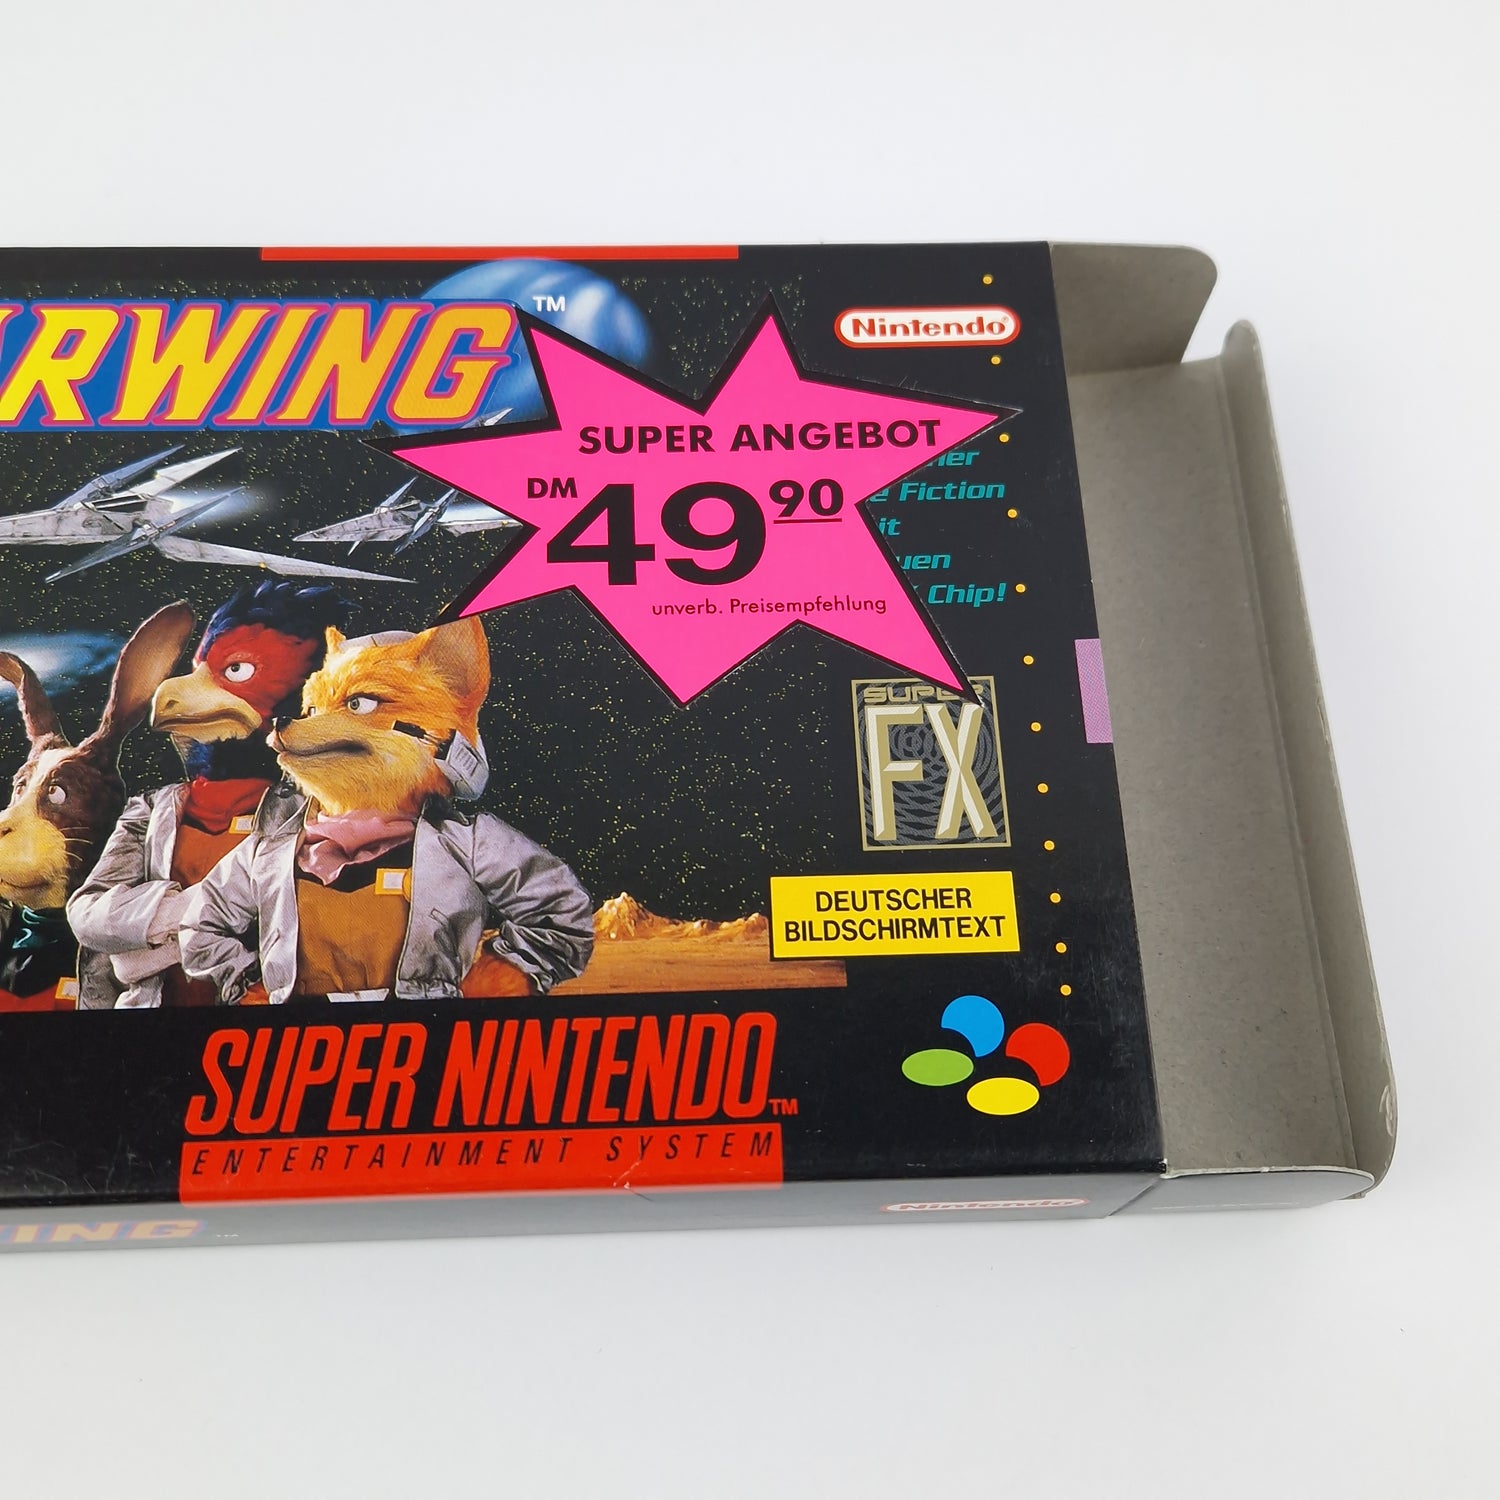 Super Nintendo Game: Starwing - Module Instructions OVP cib | SNES PAL NOE